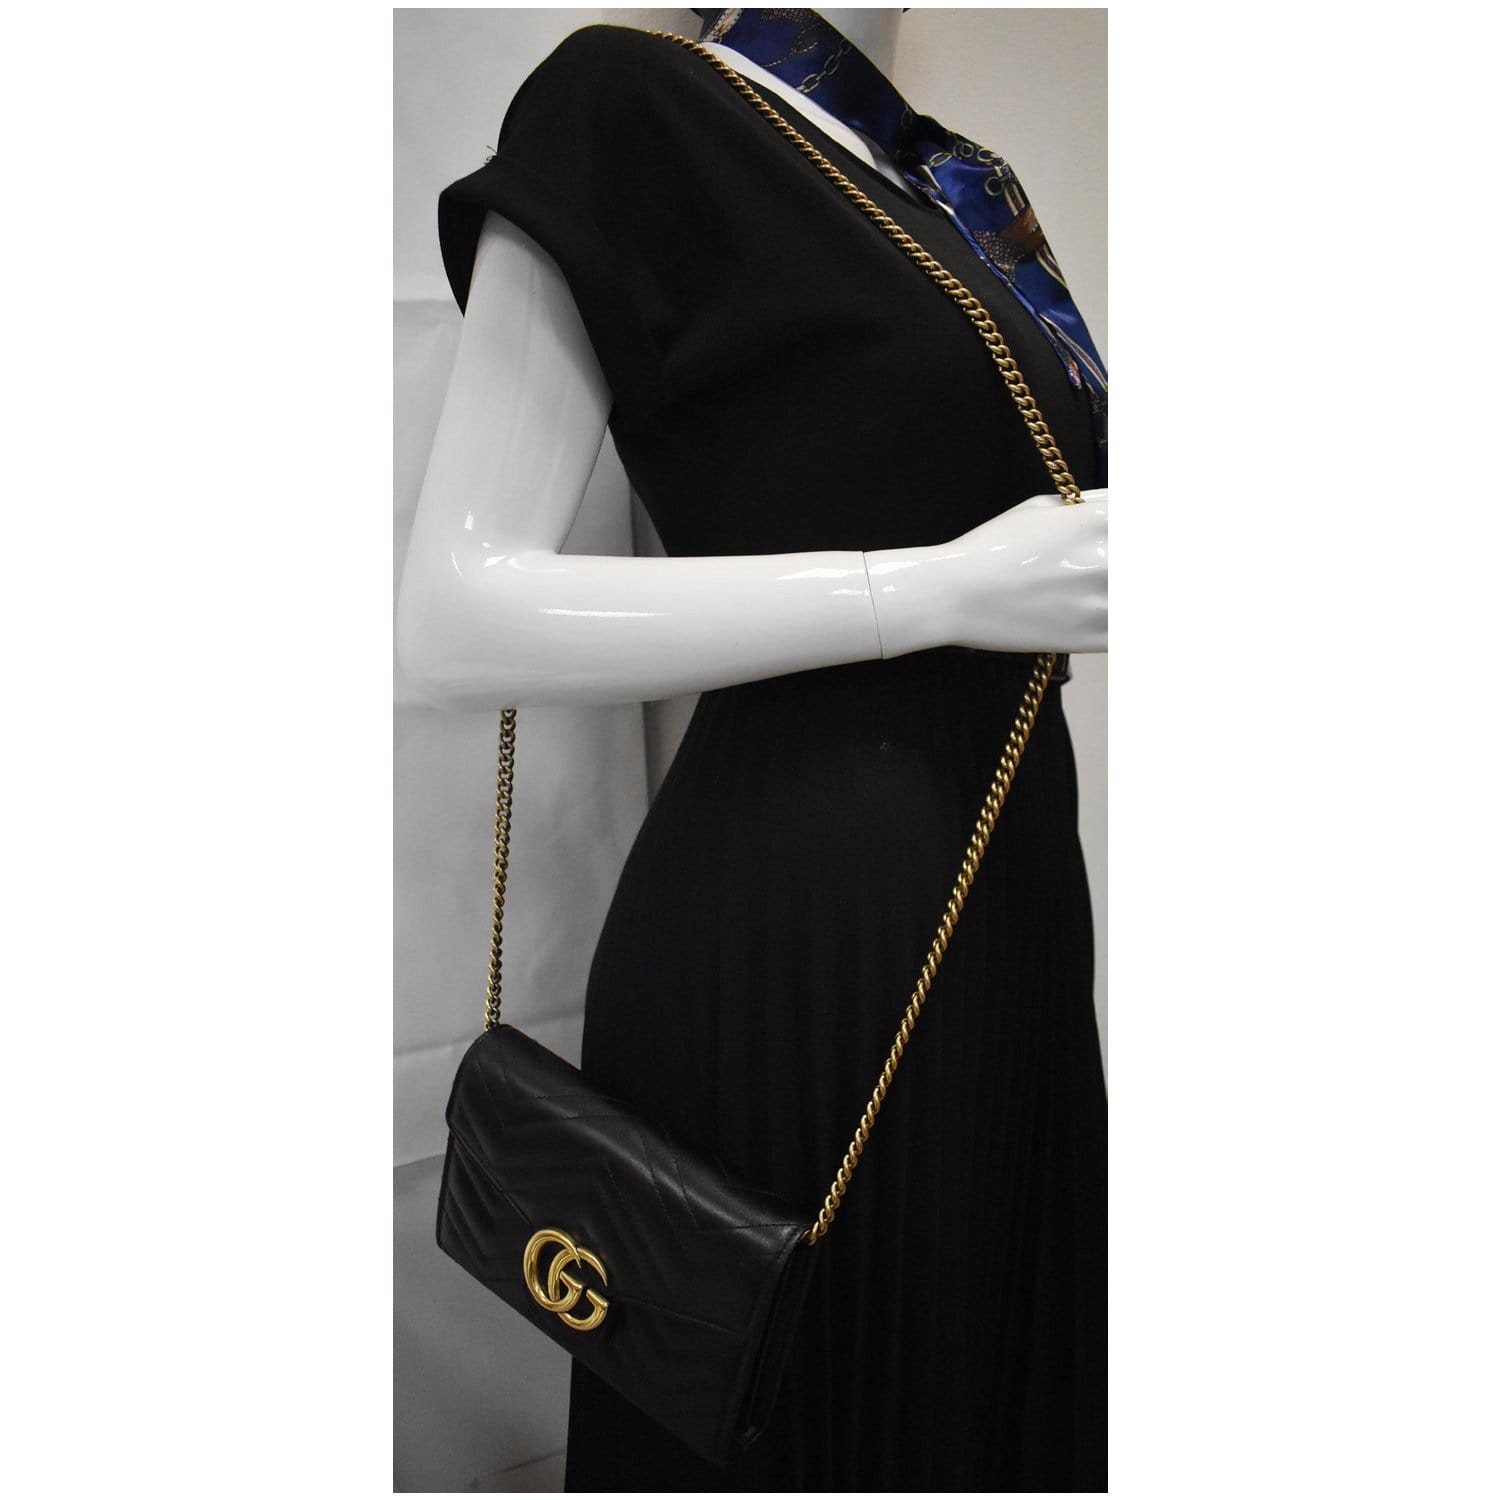 Gucci GG Marmont Mini Matelassé Zipped Shoulder Bag In Black